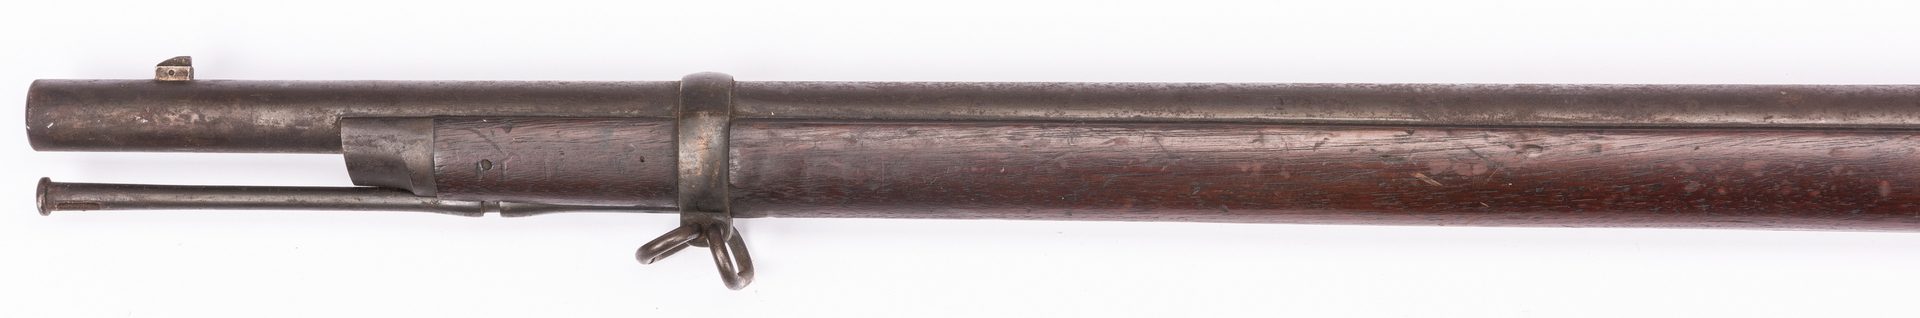 Lot 794: Springfield Model 1873 rifle, bayonet, & holster, 3 items